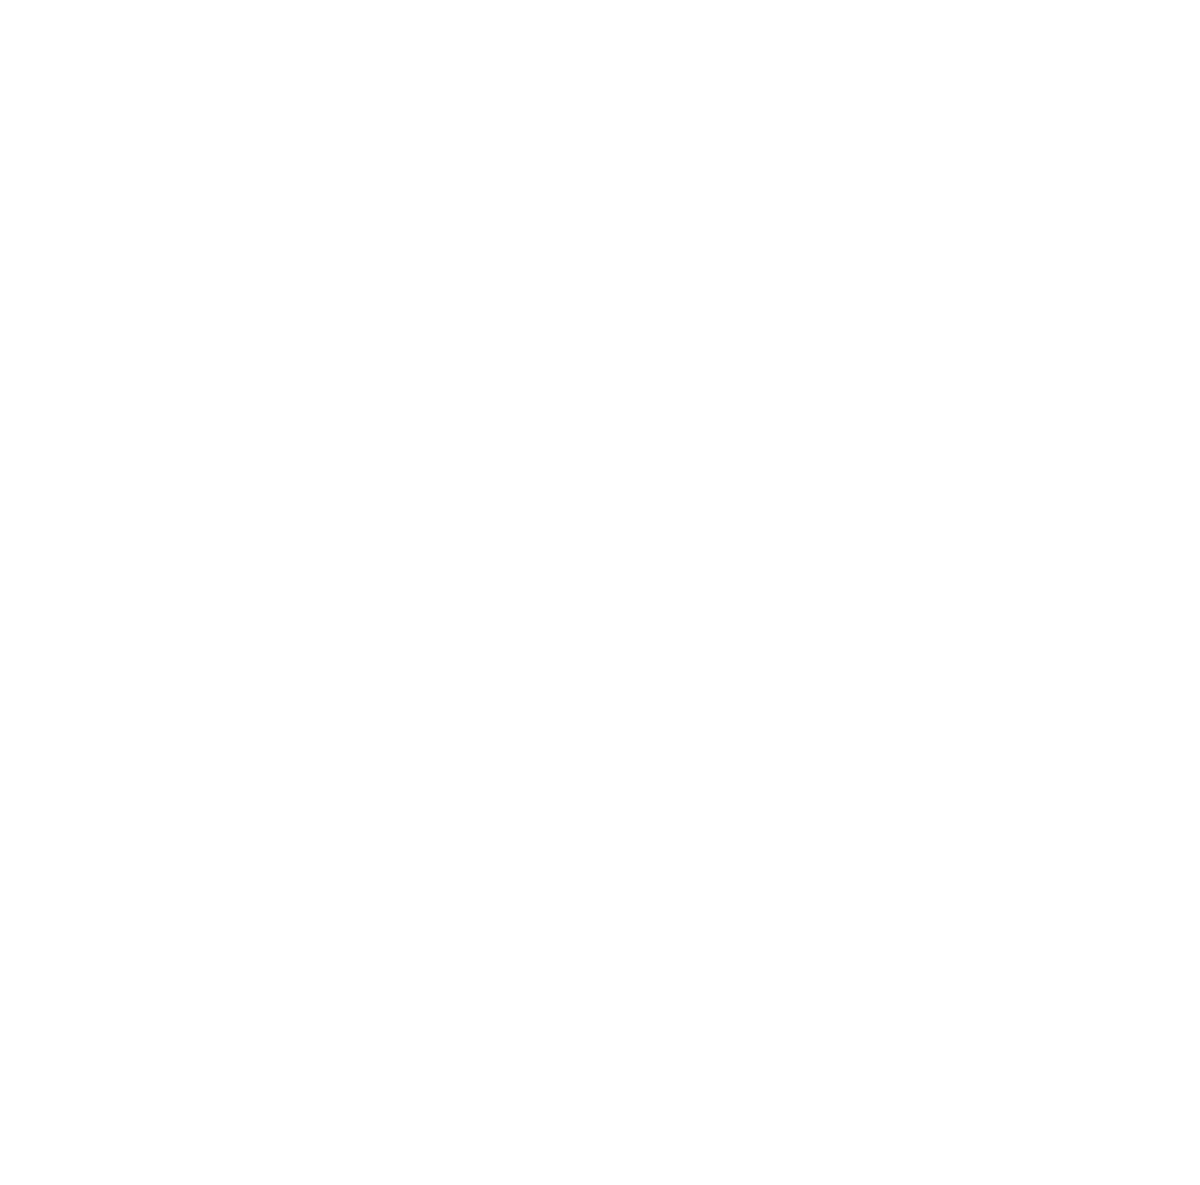 PVH Corp Logo